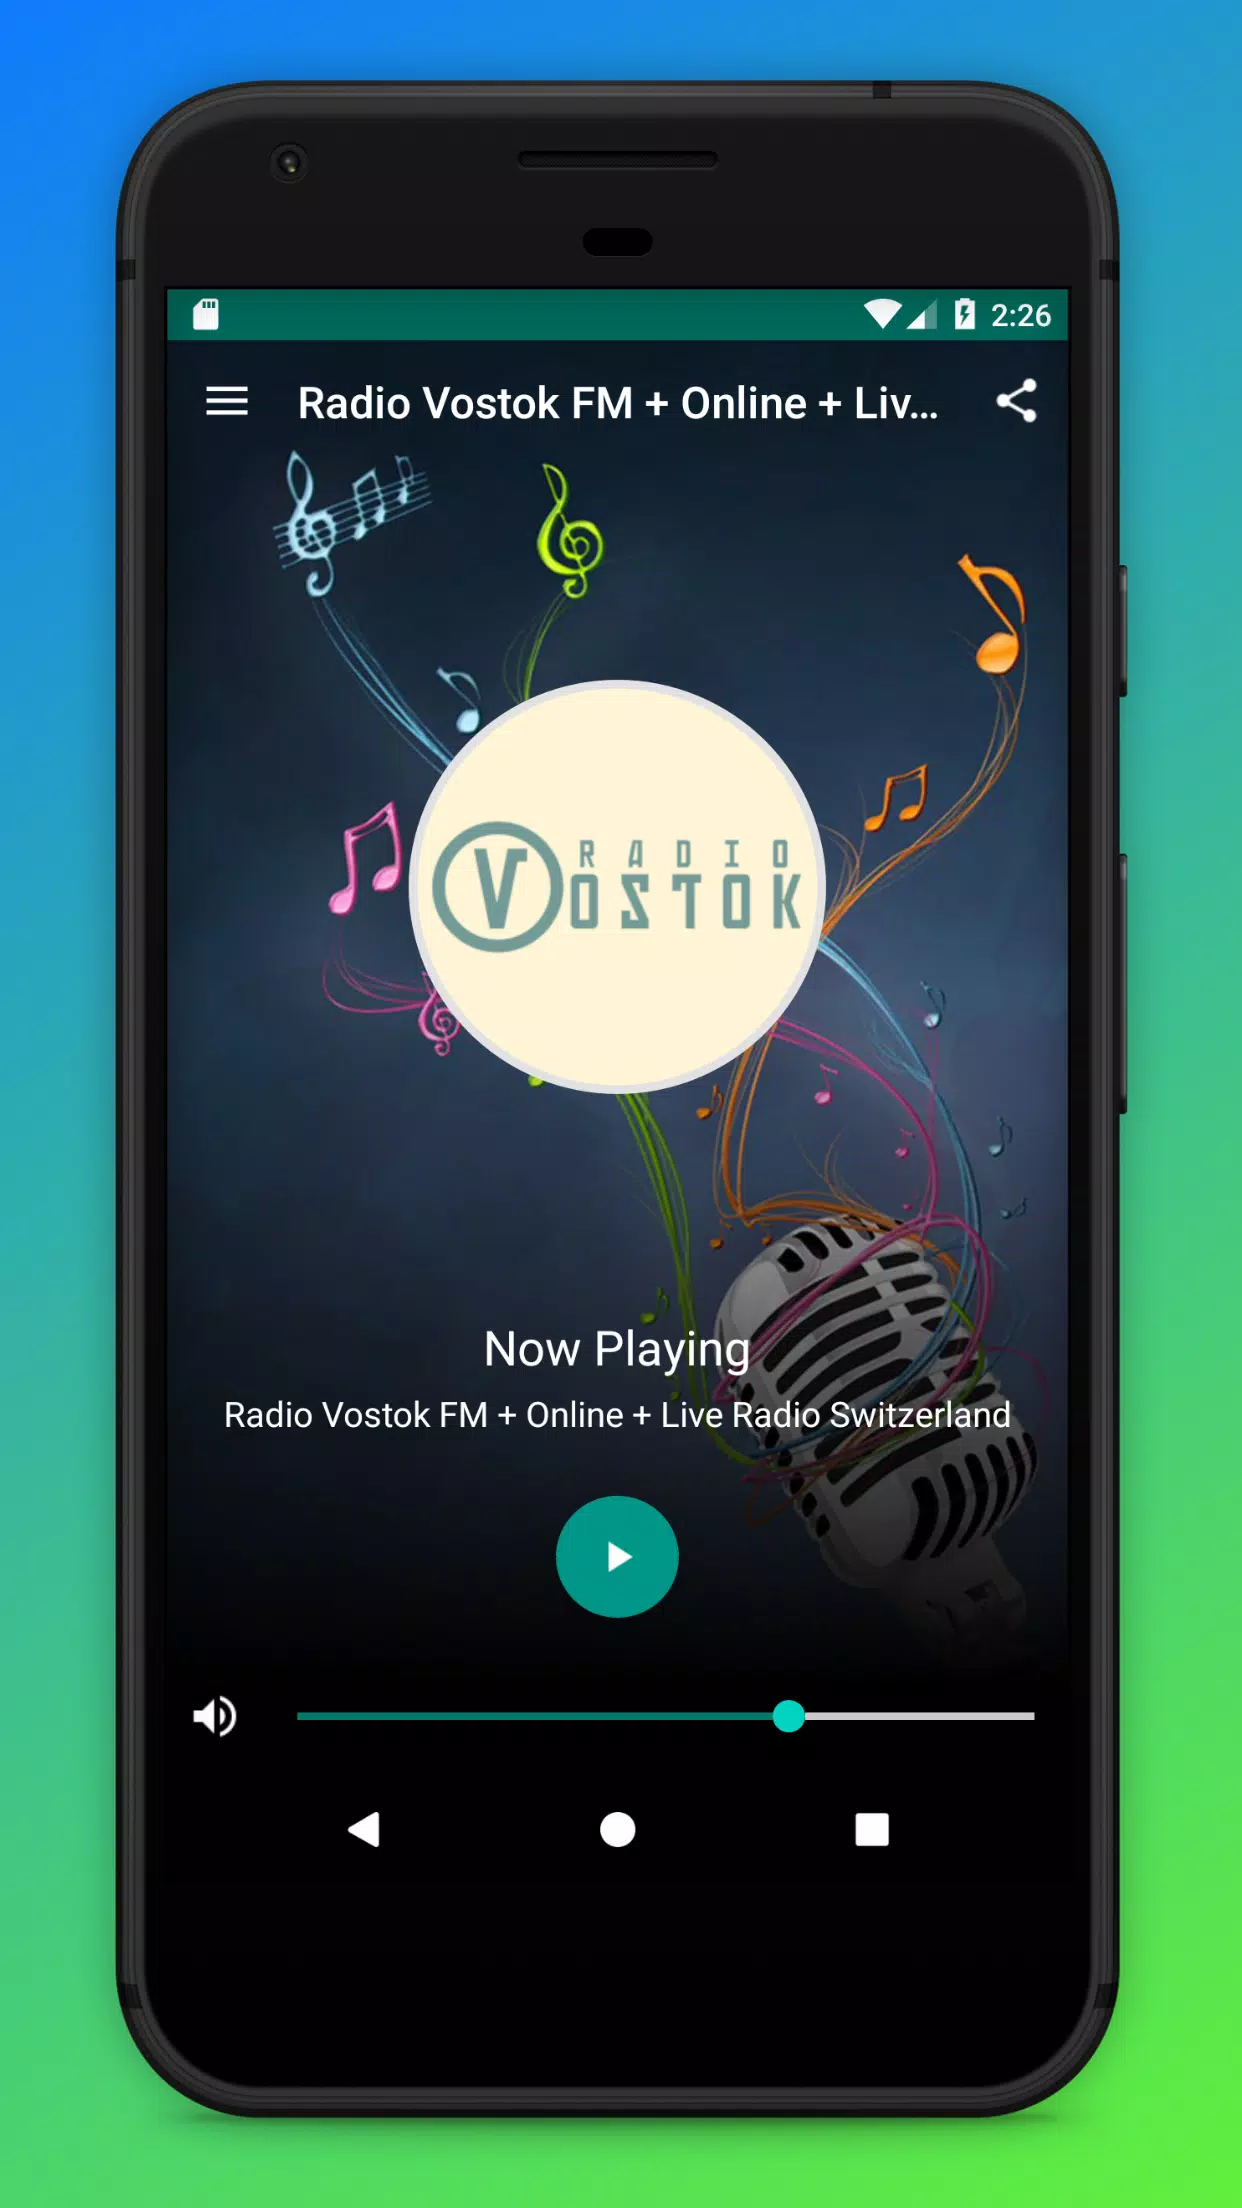 Radio Vostok FM + Online + Live Radio Switzerland for Android - APK Download